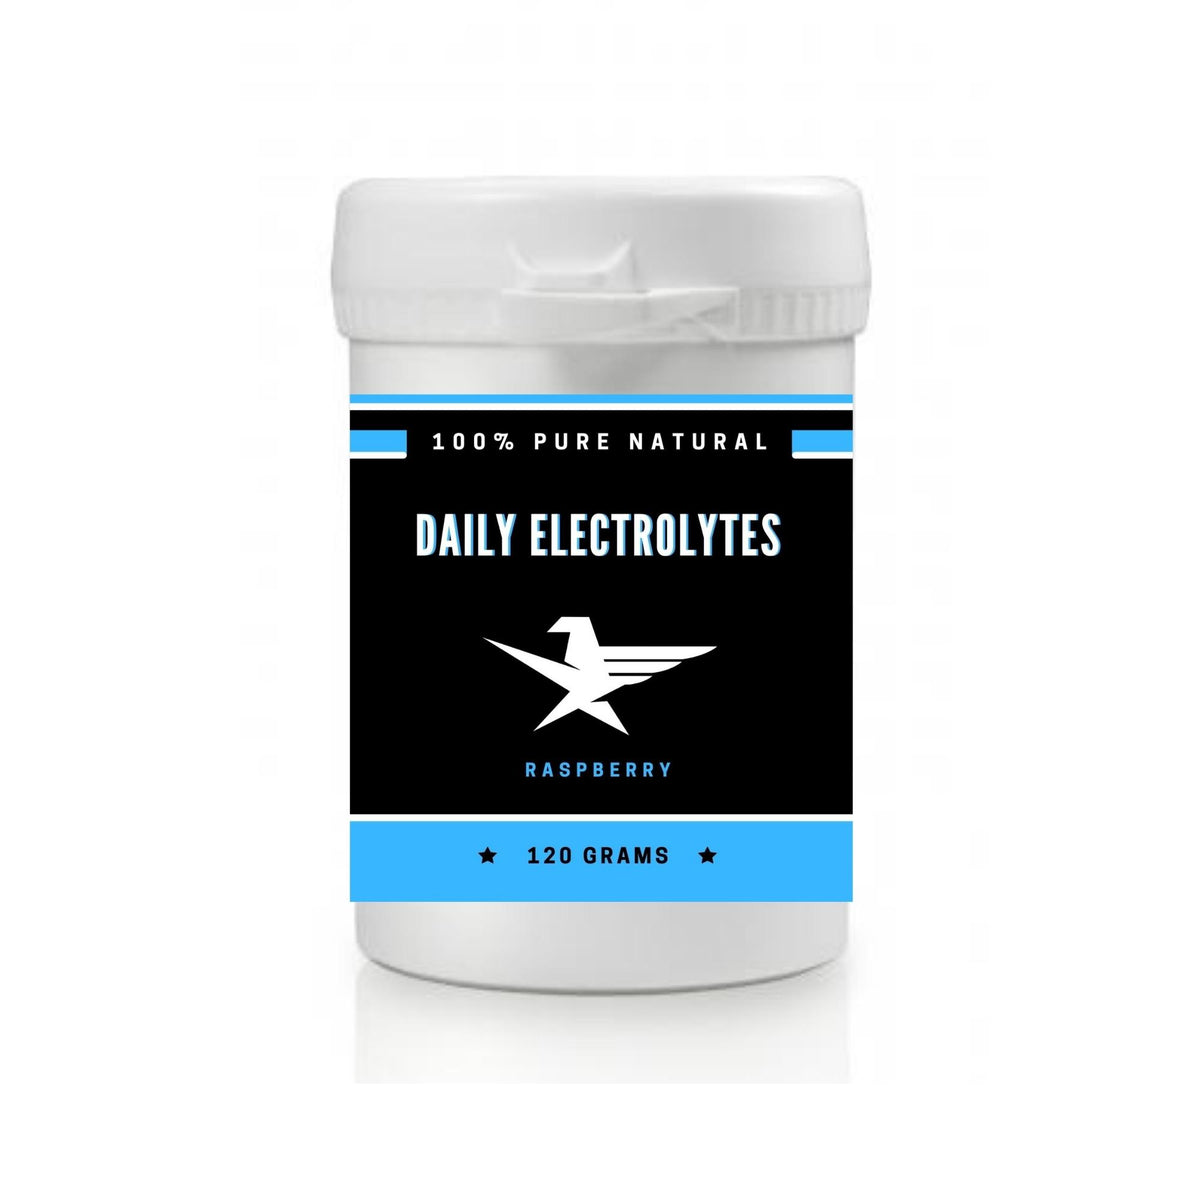 Daily Electrolytes - 120 grams - Raspberry Flavor